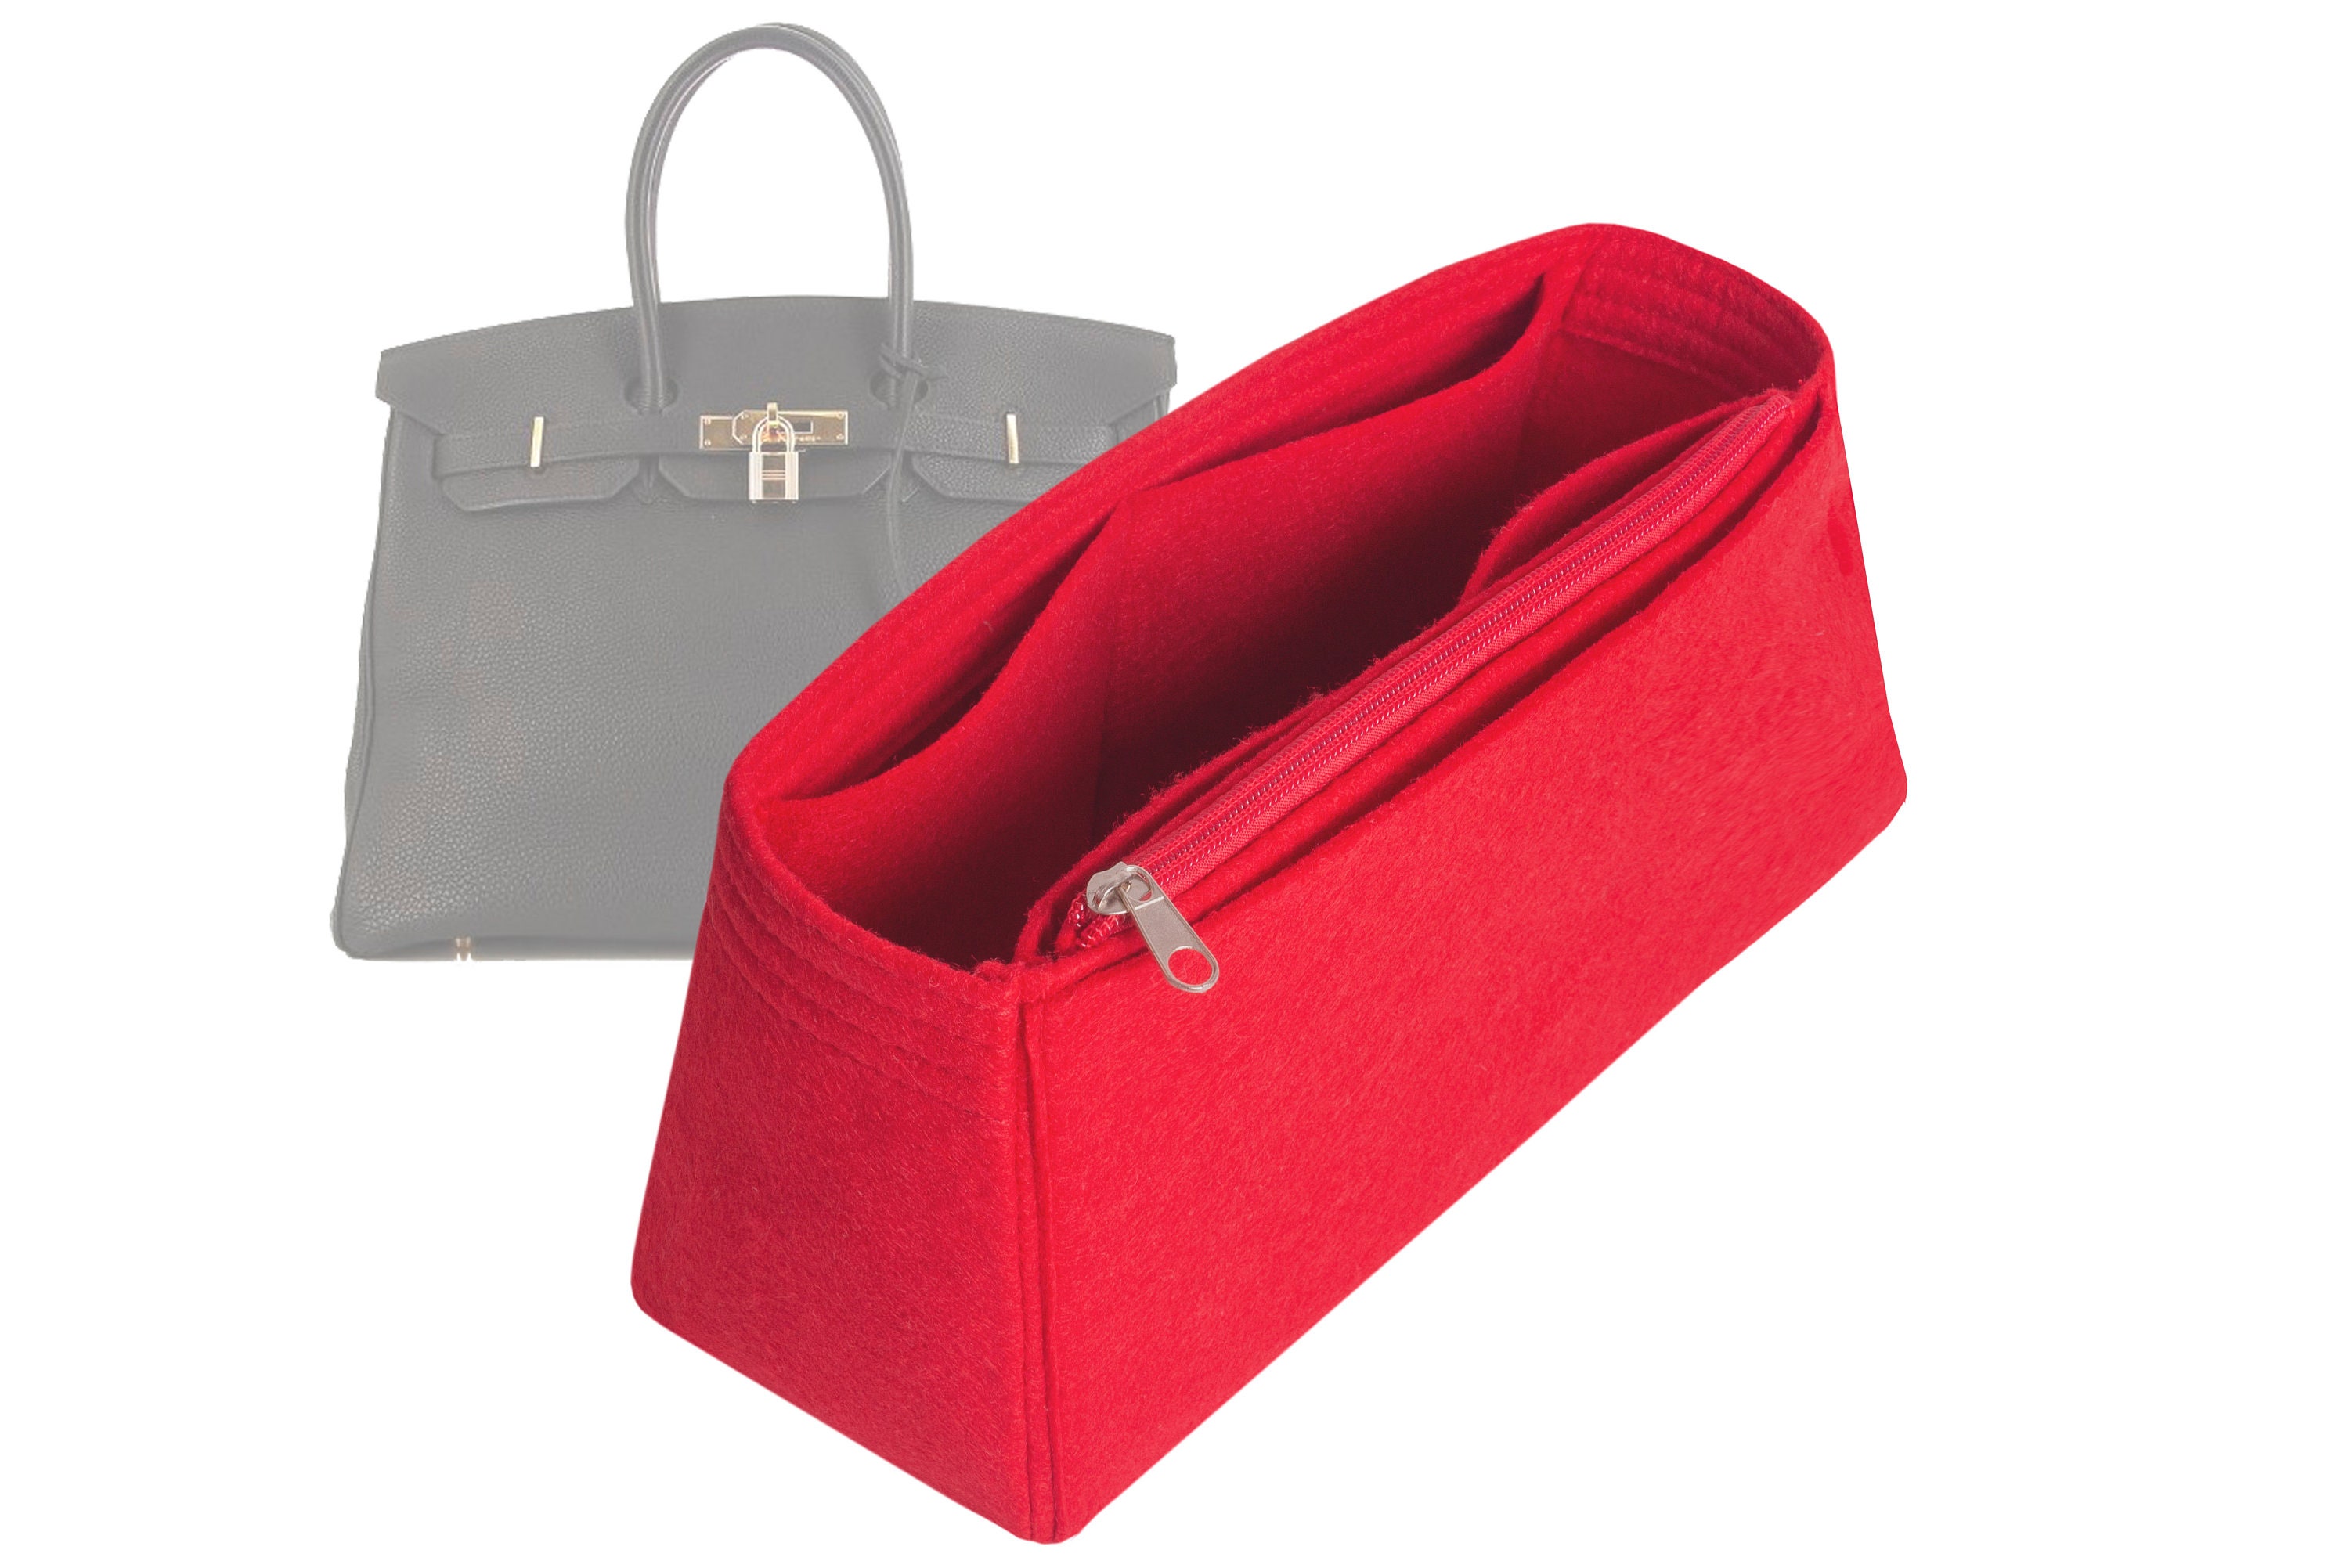  Zoomoni Premium Bag Organizer for Hermes Birkin 25 - Premium  Felt (Handmade/20 Color Options) [Purse Organiser, Liner, Insert, Shaper] :  Handmade Products